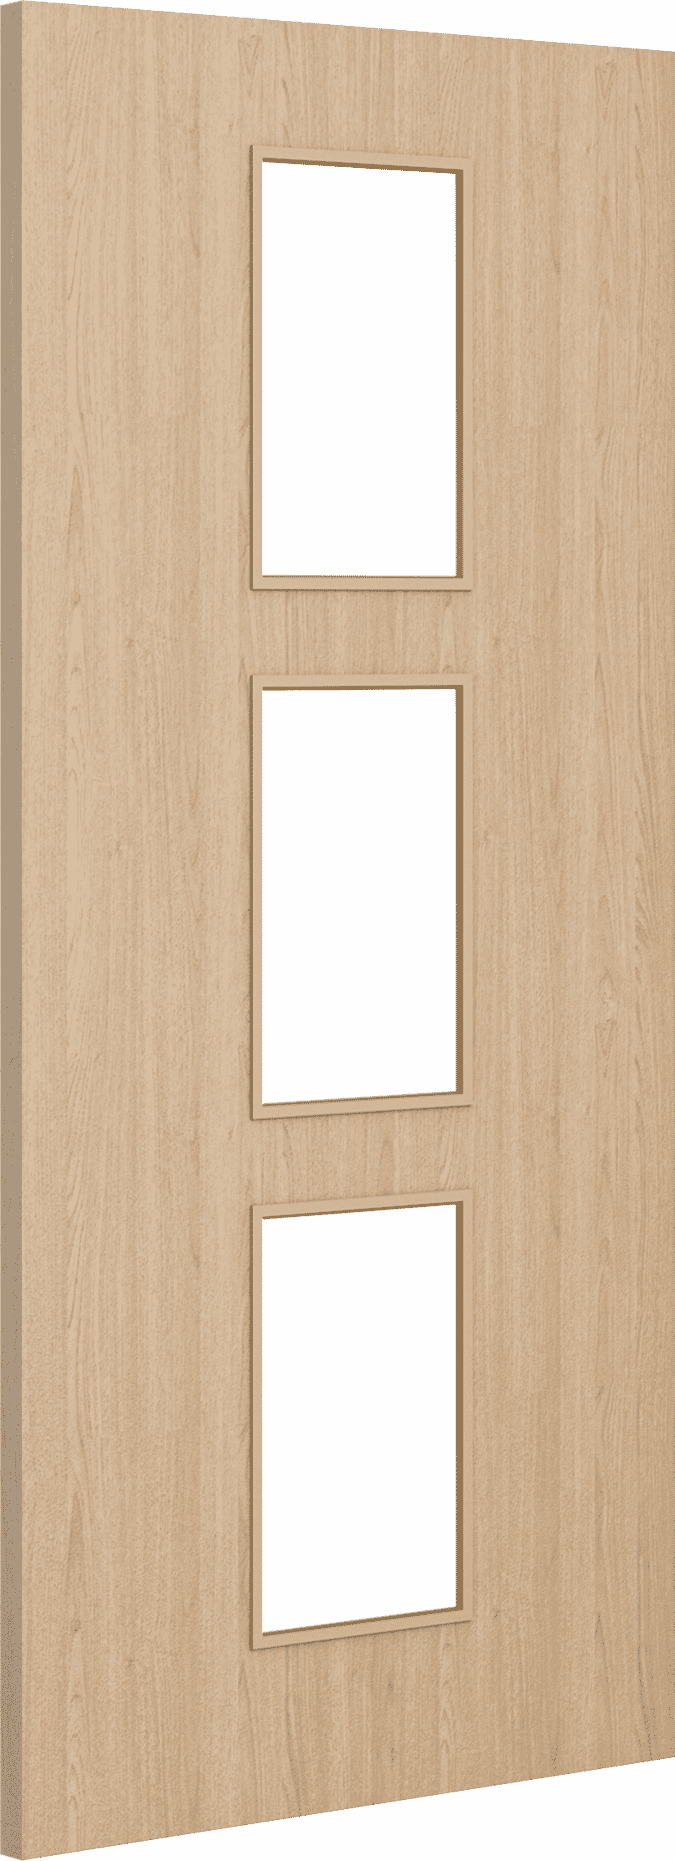 1981mm x 533mm x 44mm (21") Architectural Oak 11 Frosted Glazed - Prefinished FD30 Fire Door Blank